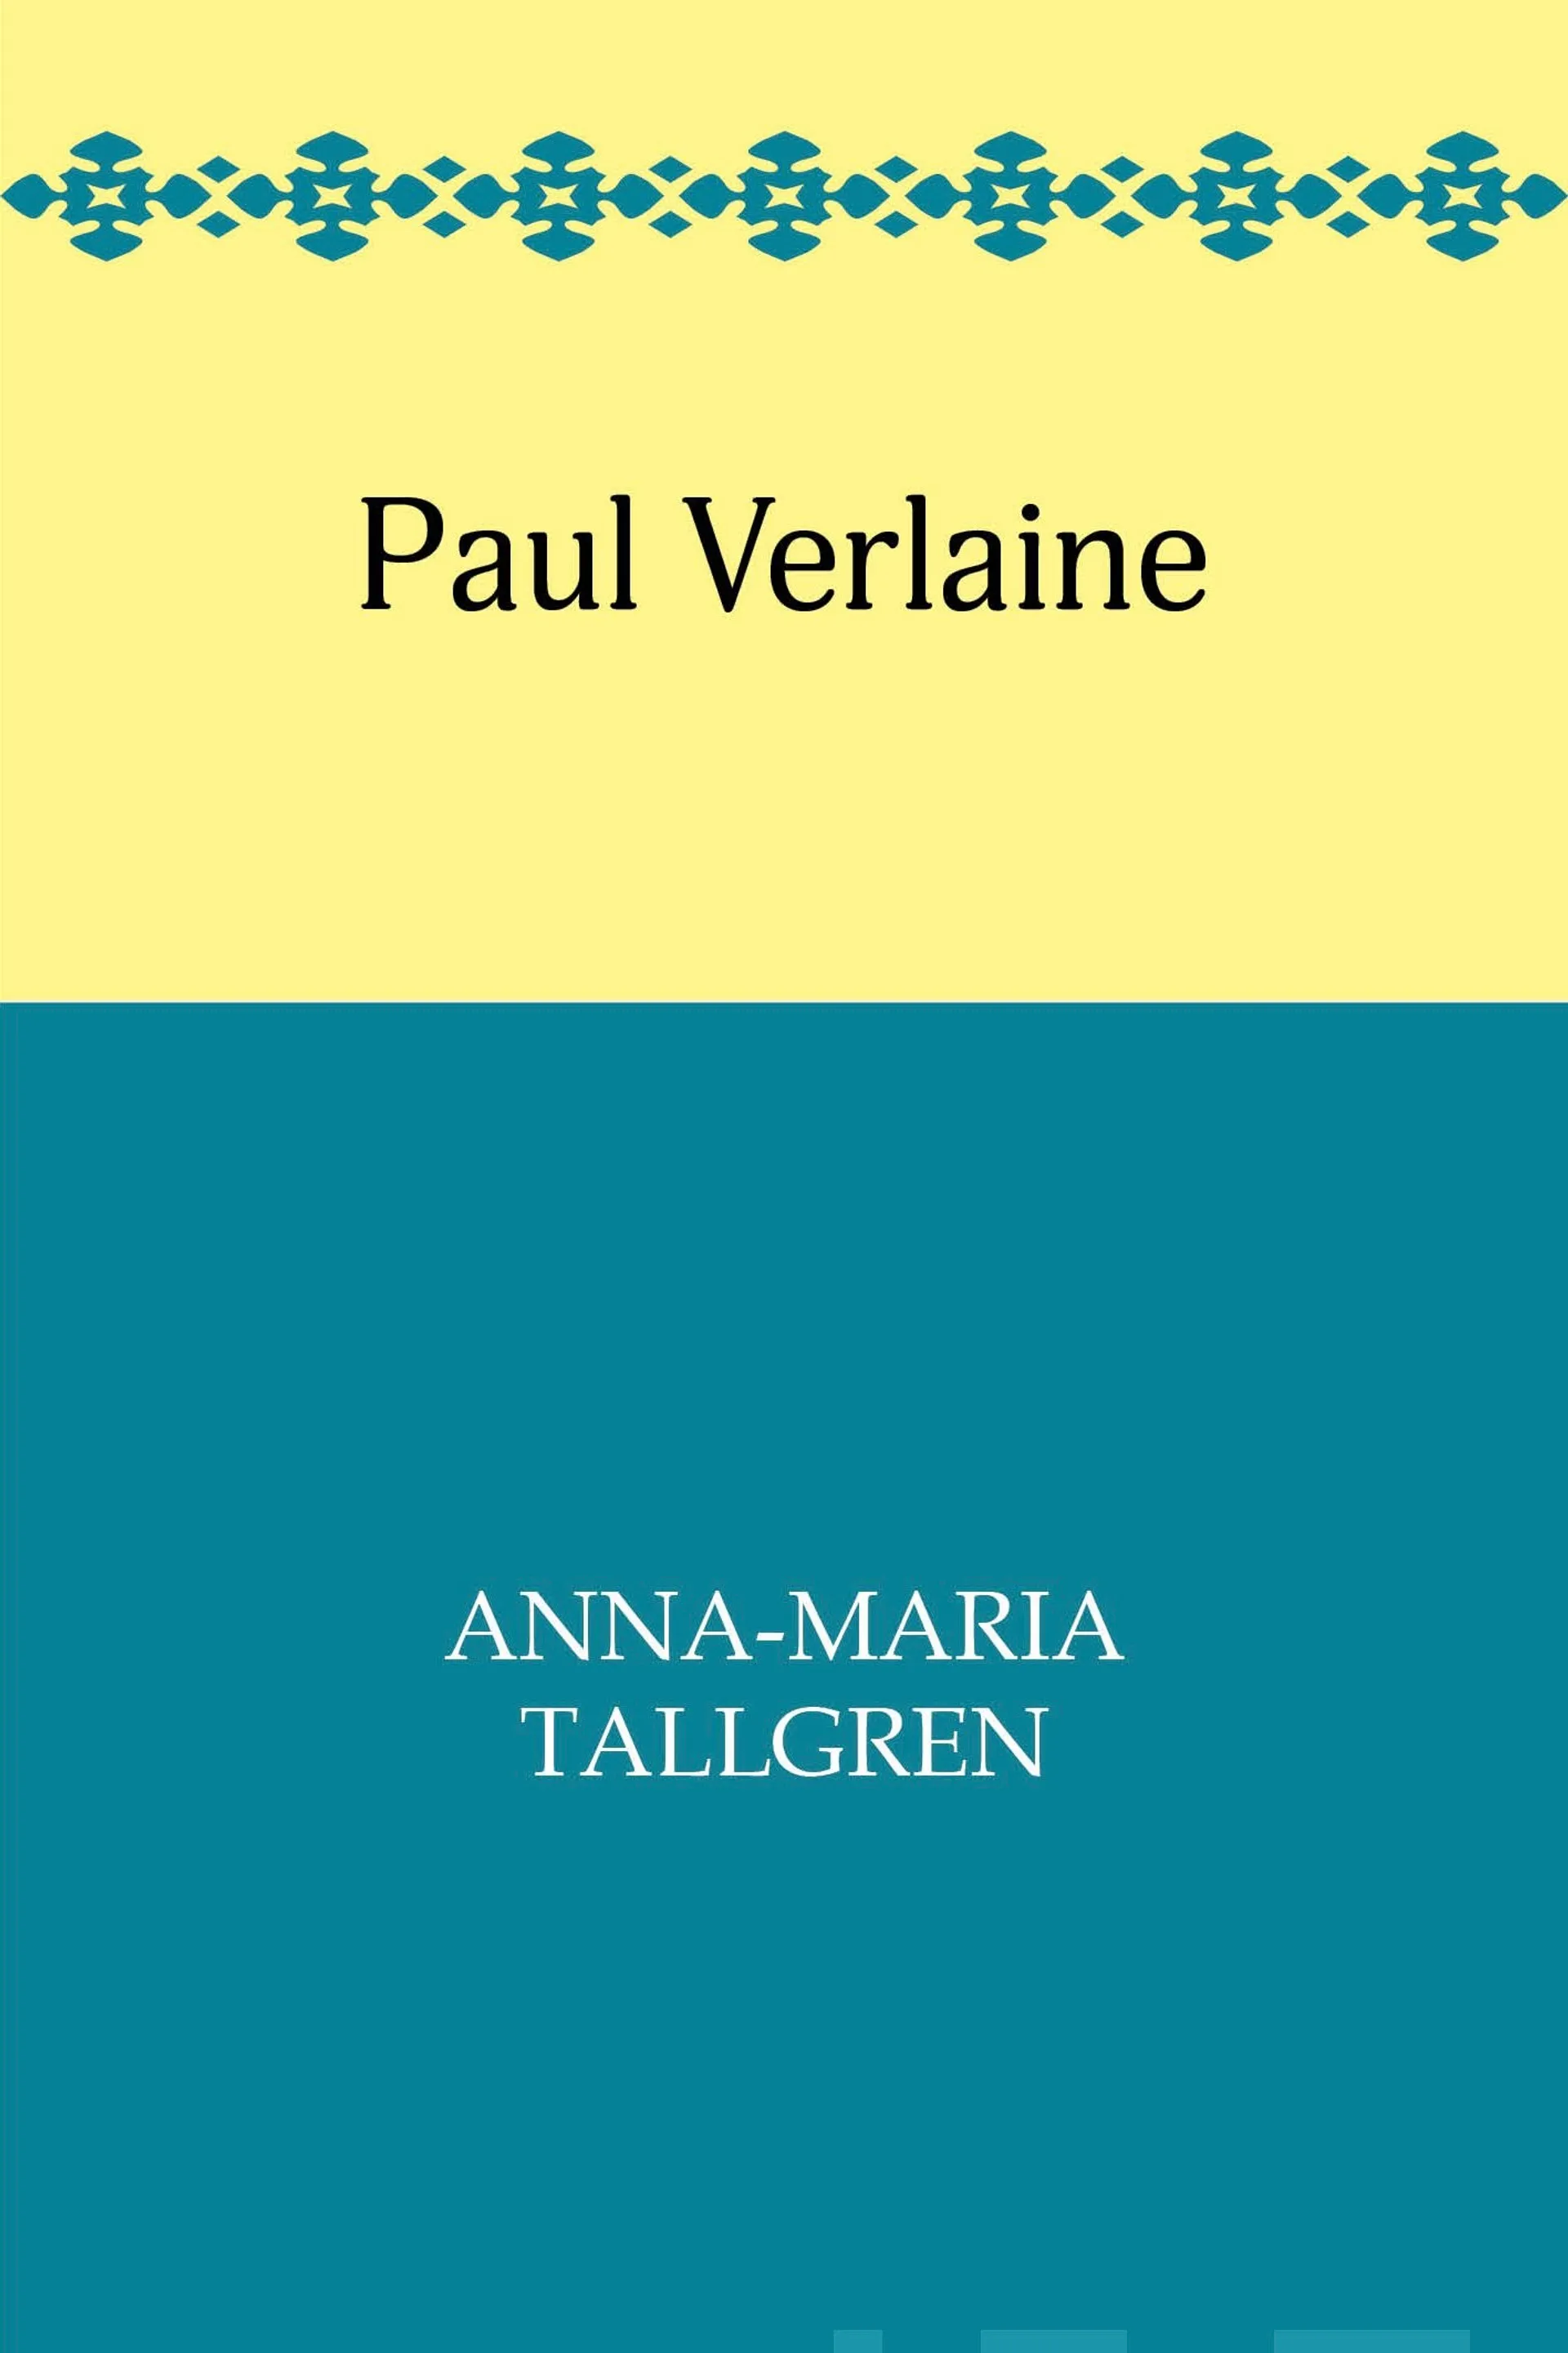 Tallgren, Paul Verlaine